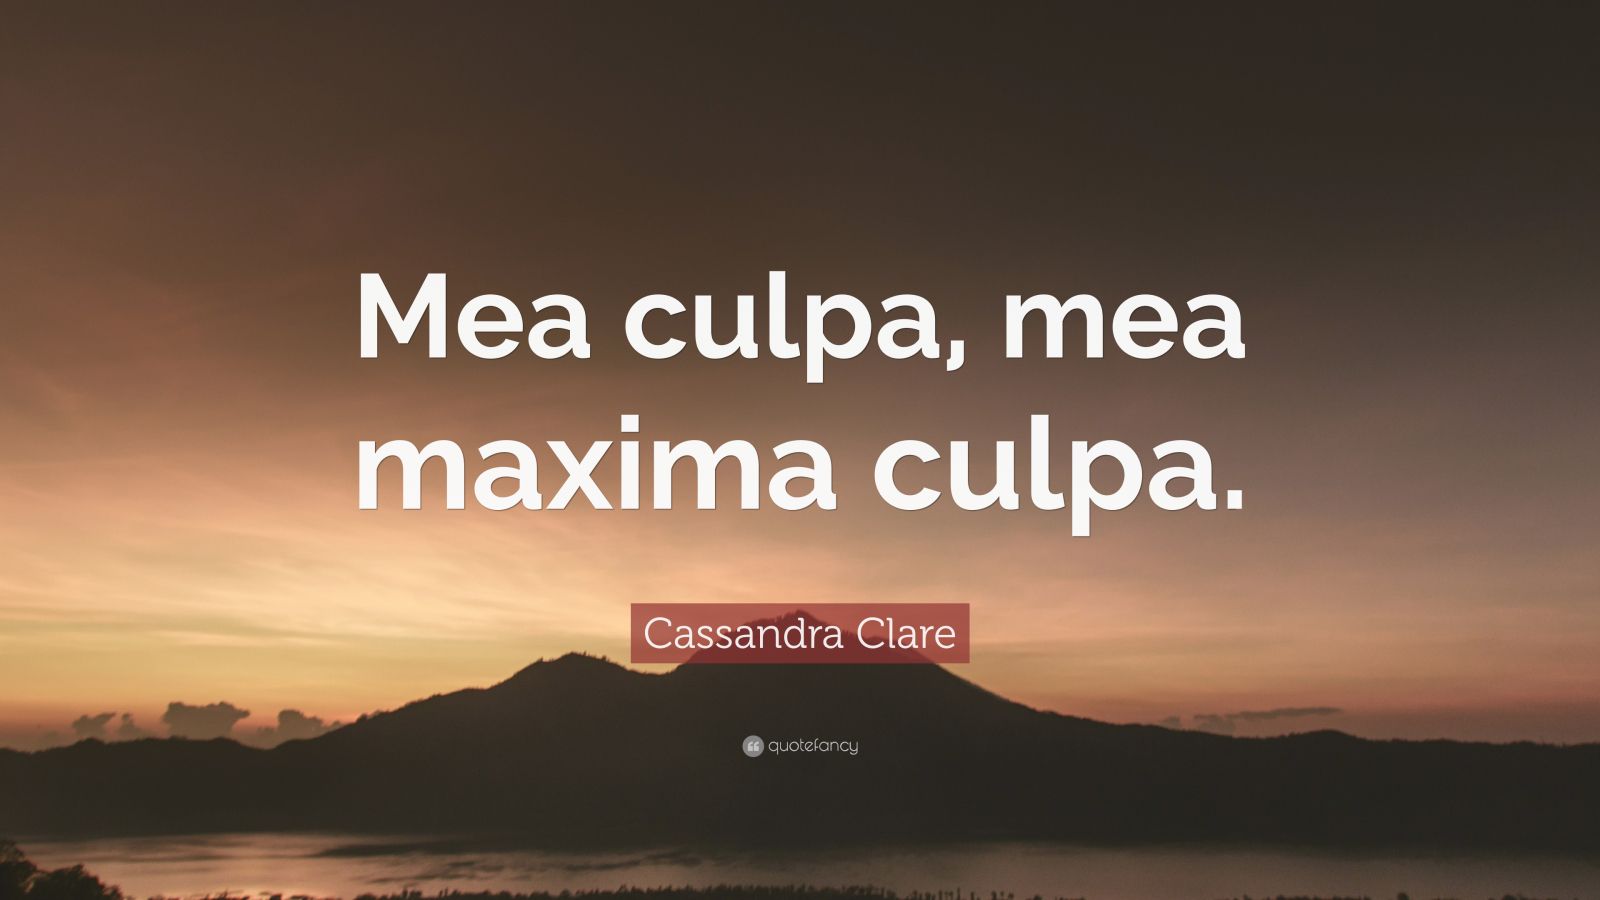 Cassandra Clare Quote “mea Culpa Mea Maxima Culpa ” 12 Wallpapers Quotefancy